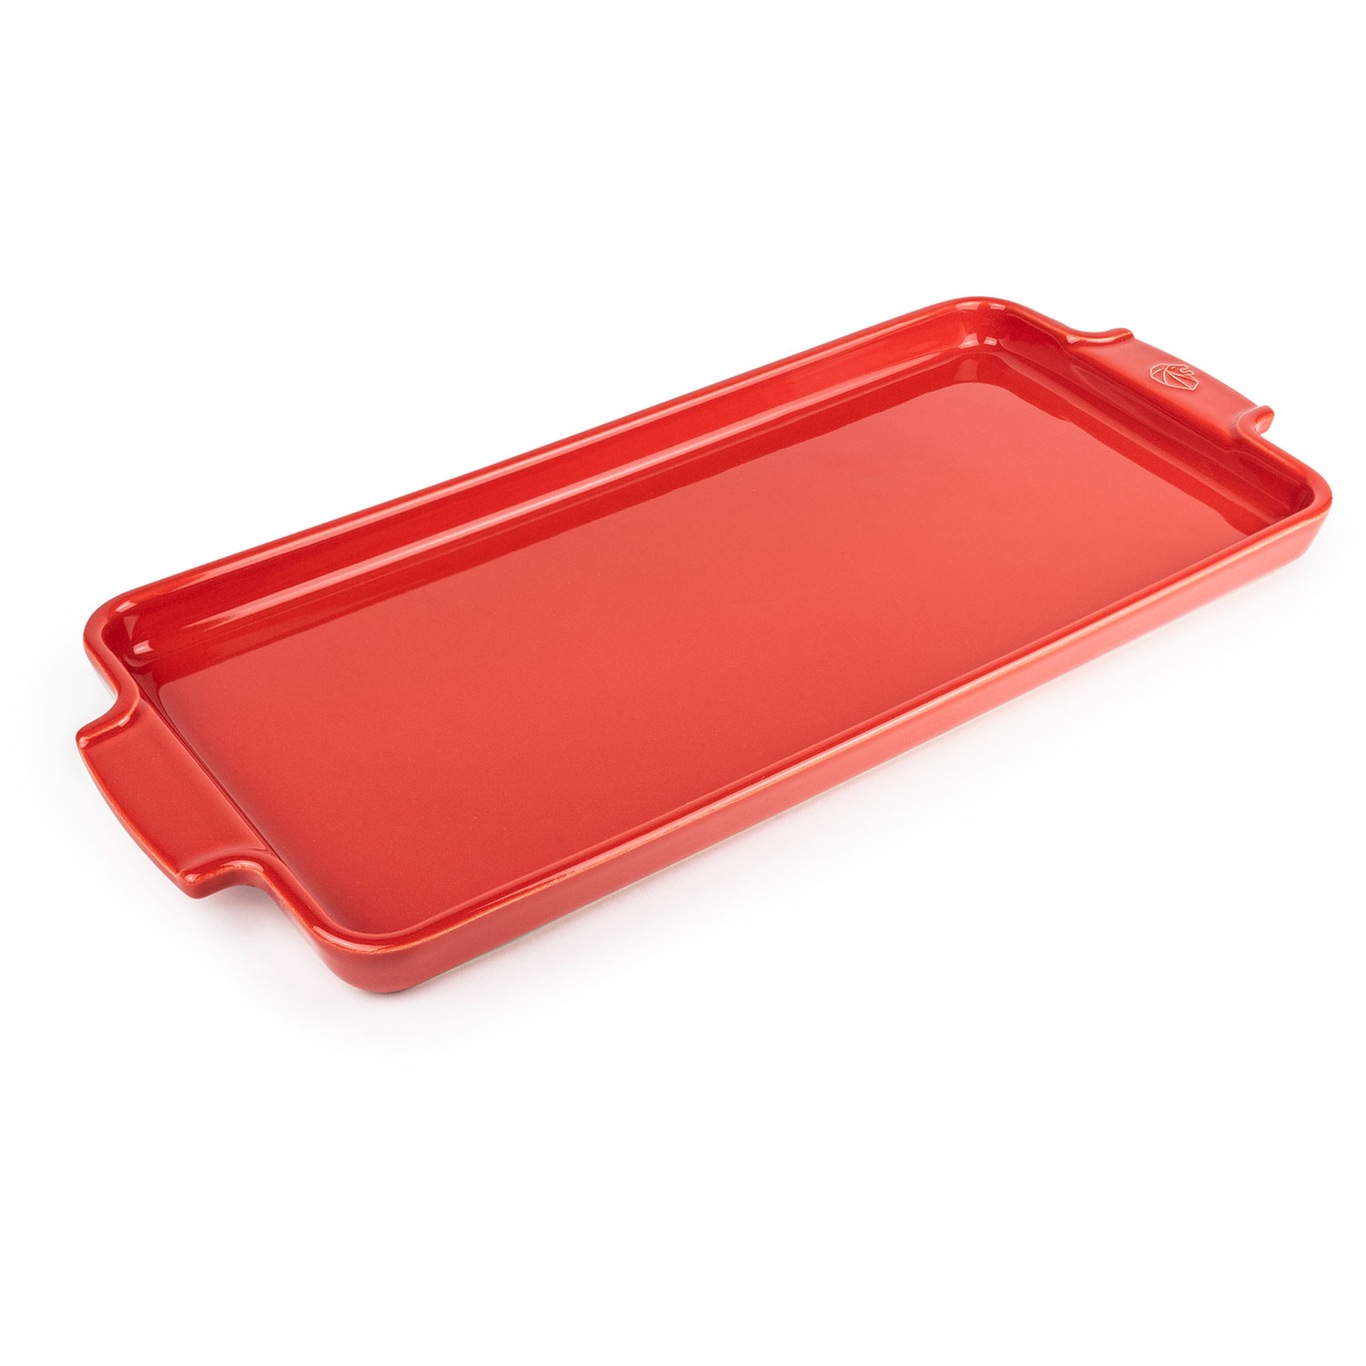 Appolia Serving Dish 16x40 cm, Red